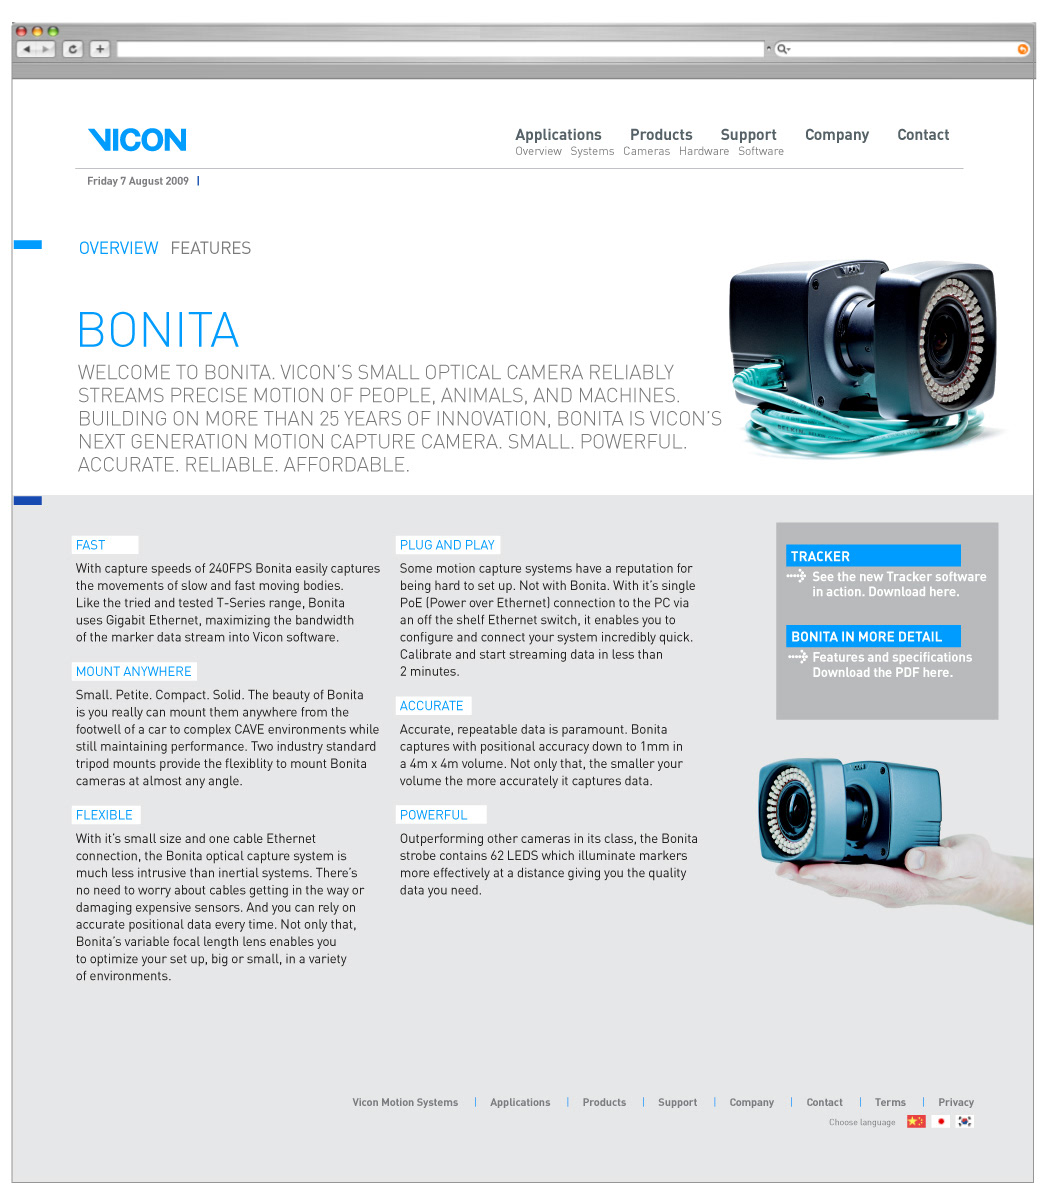 mocap motion capture 3D camera Packaging box vicon Z3 birmingham OMG